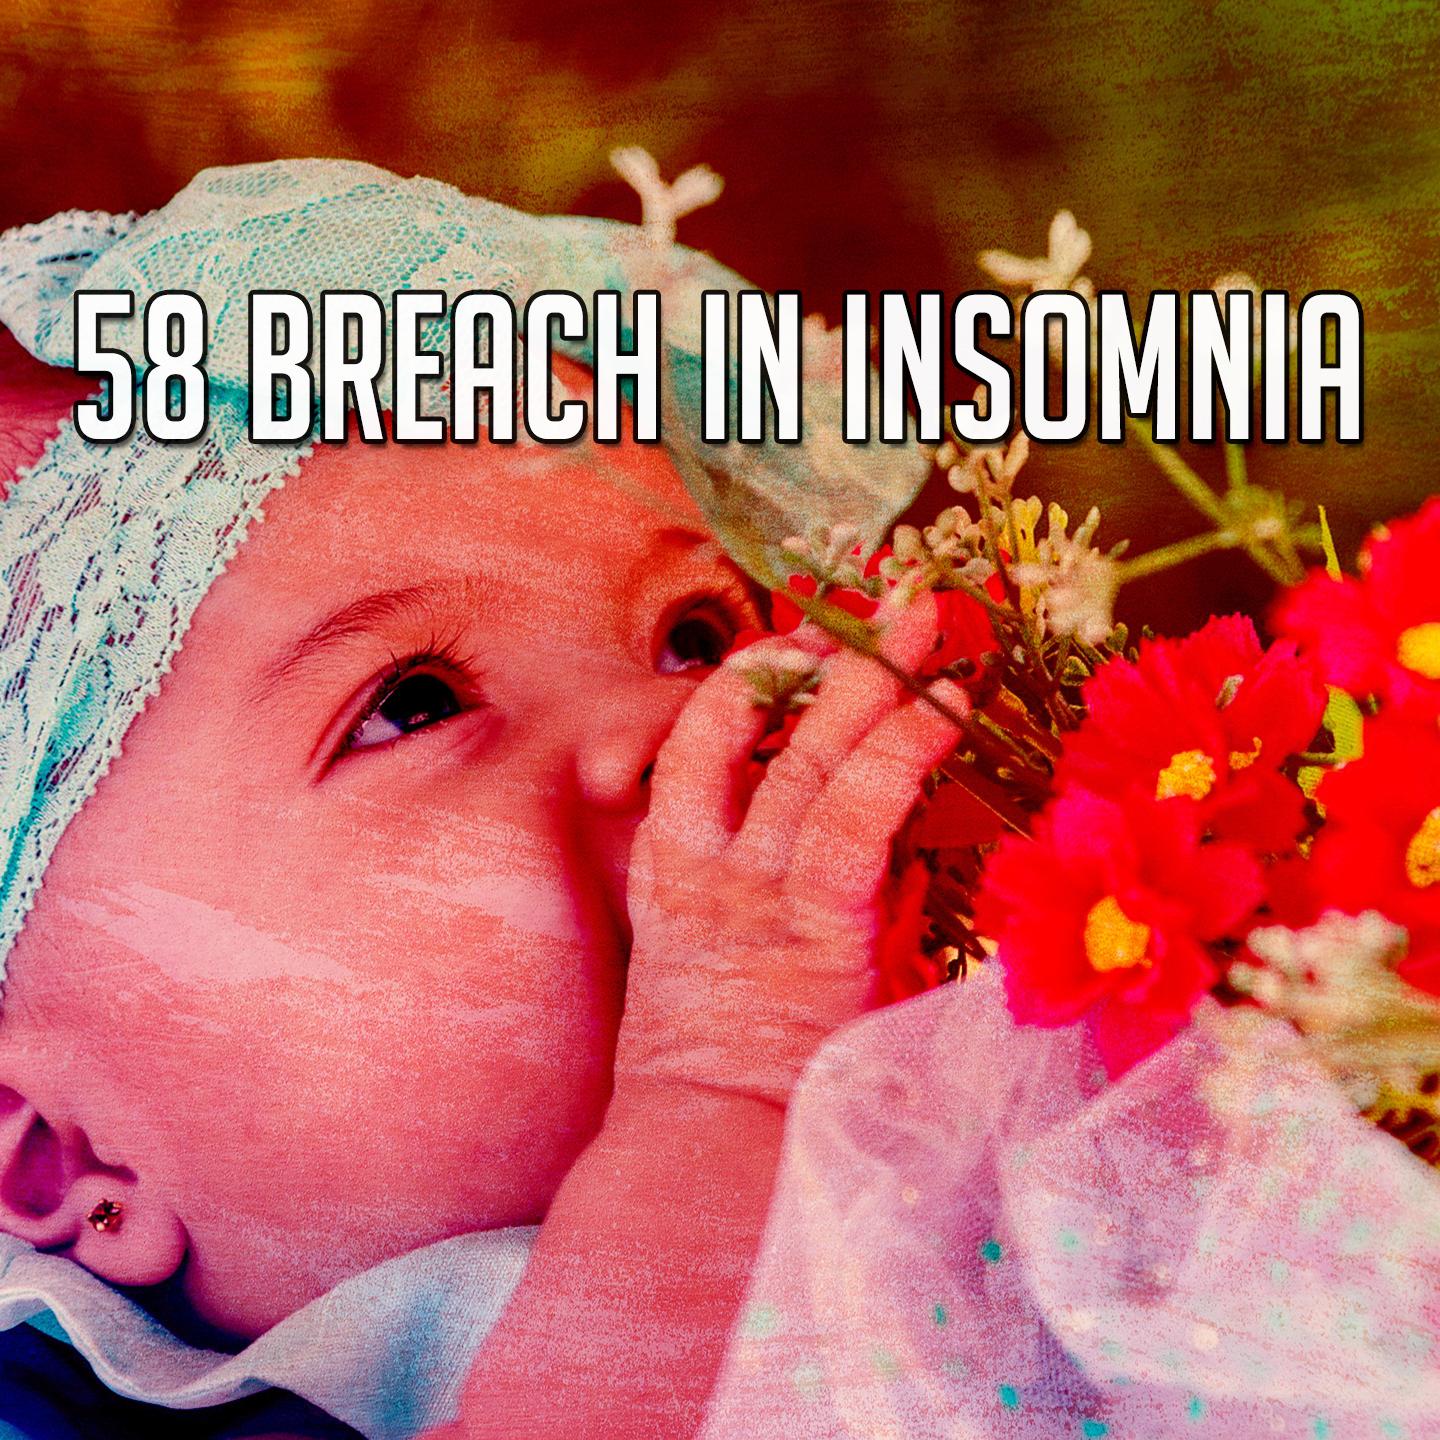 58 Breach in Insomnia